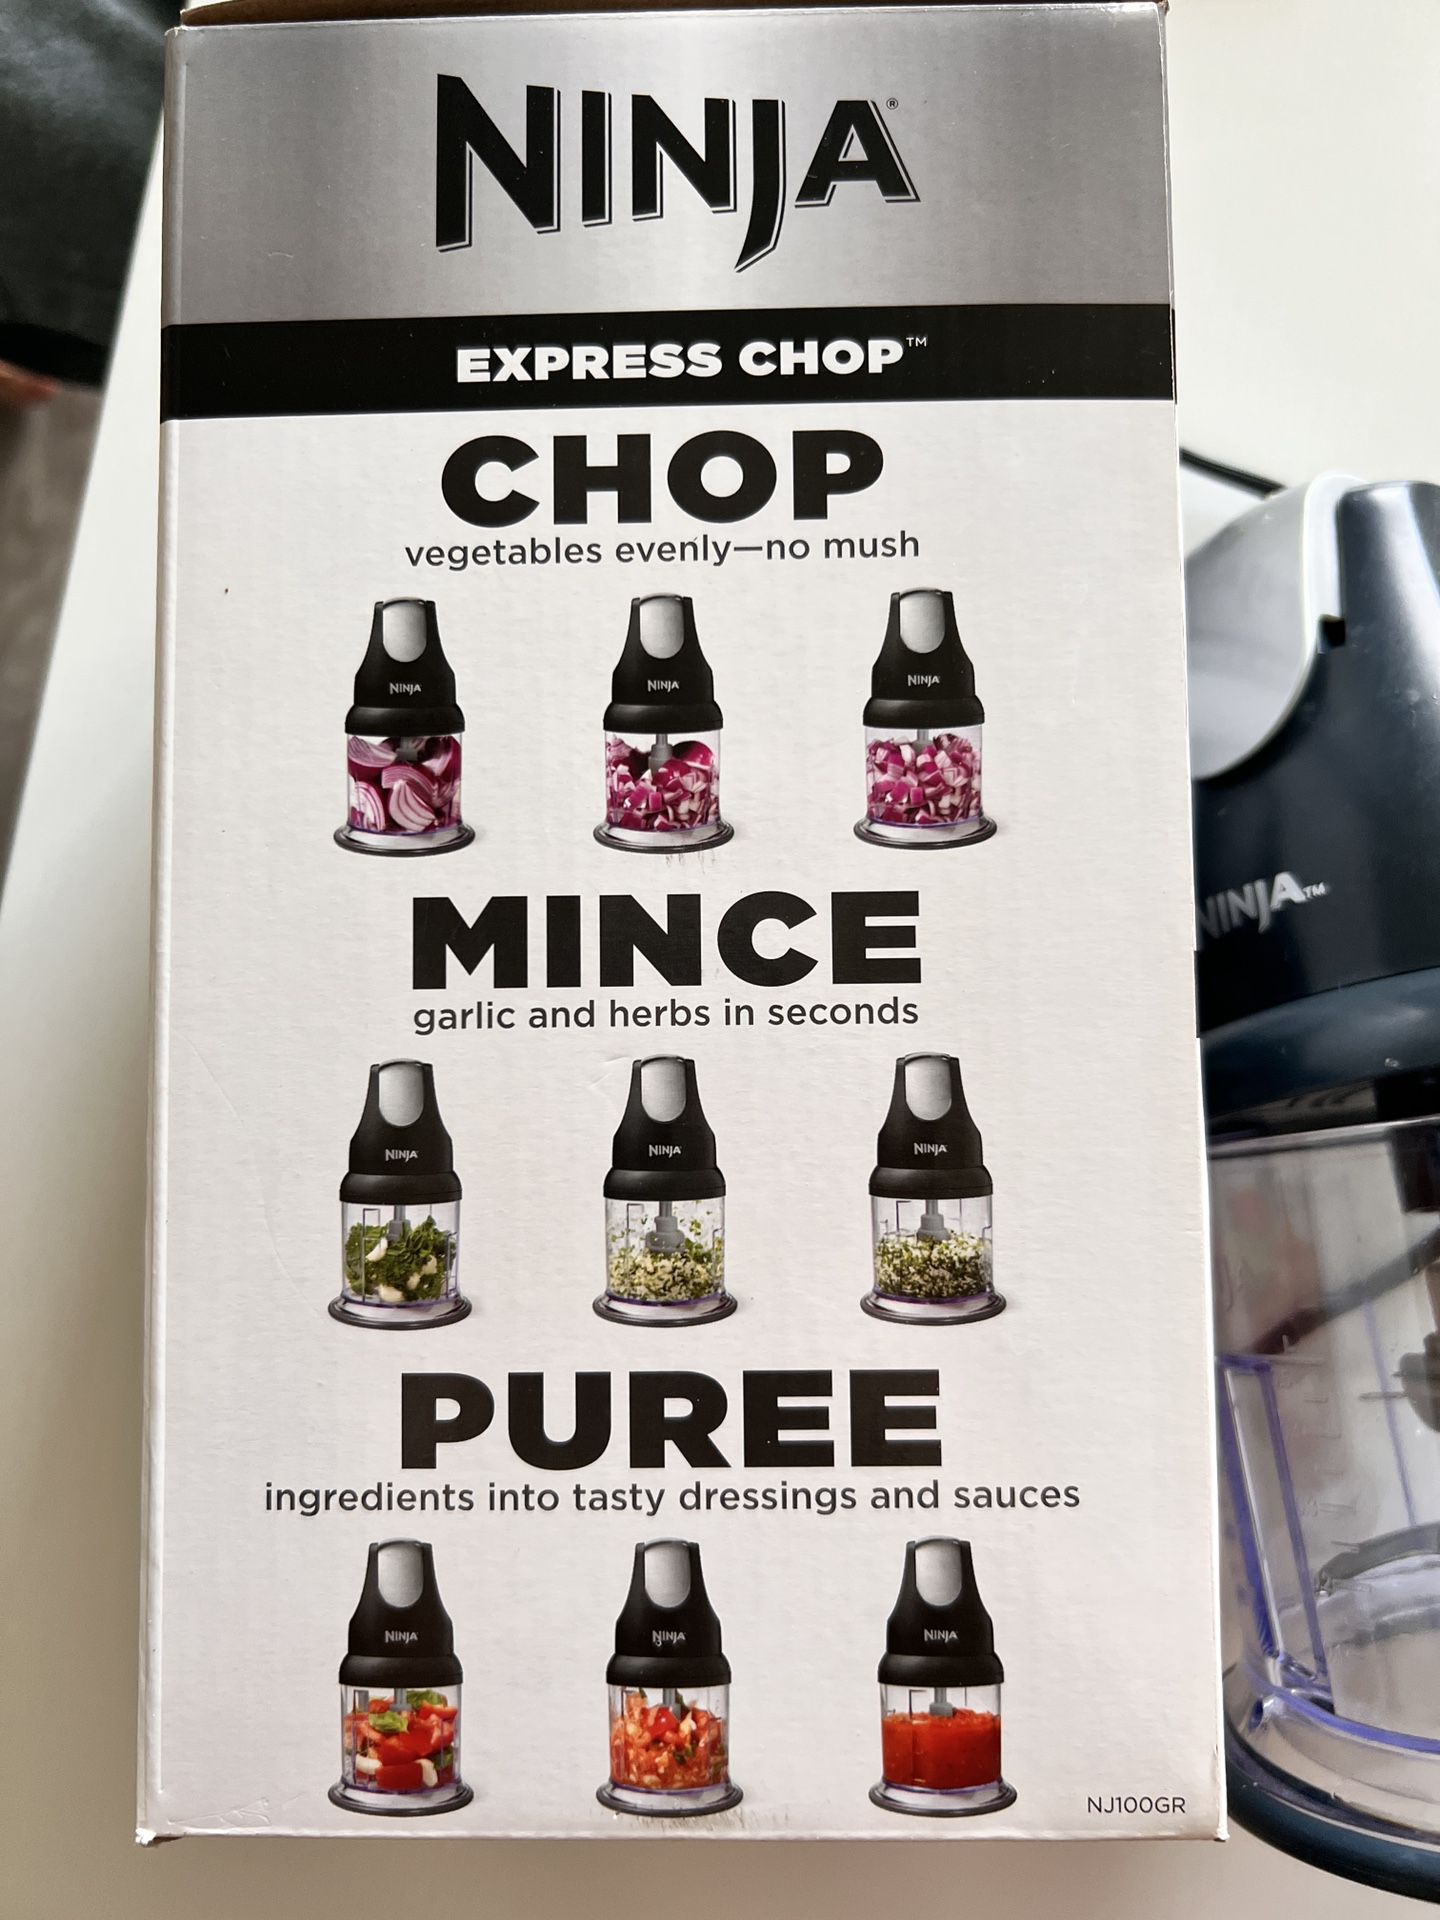 Ninja Express Chop, Elite